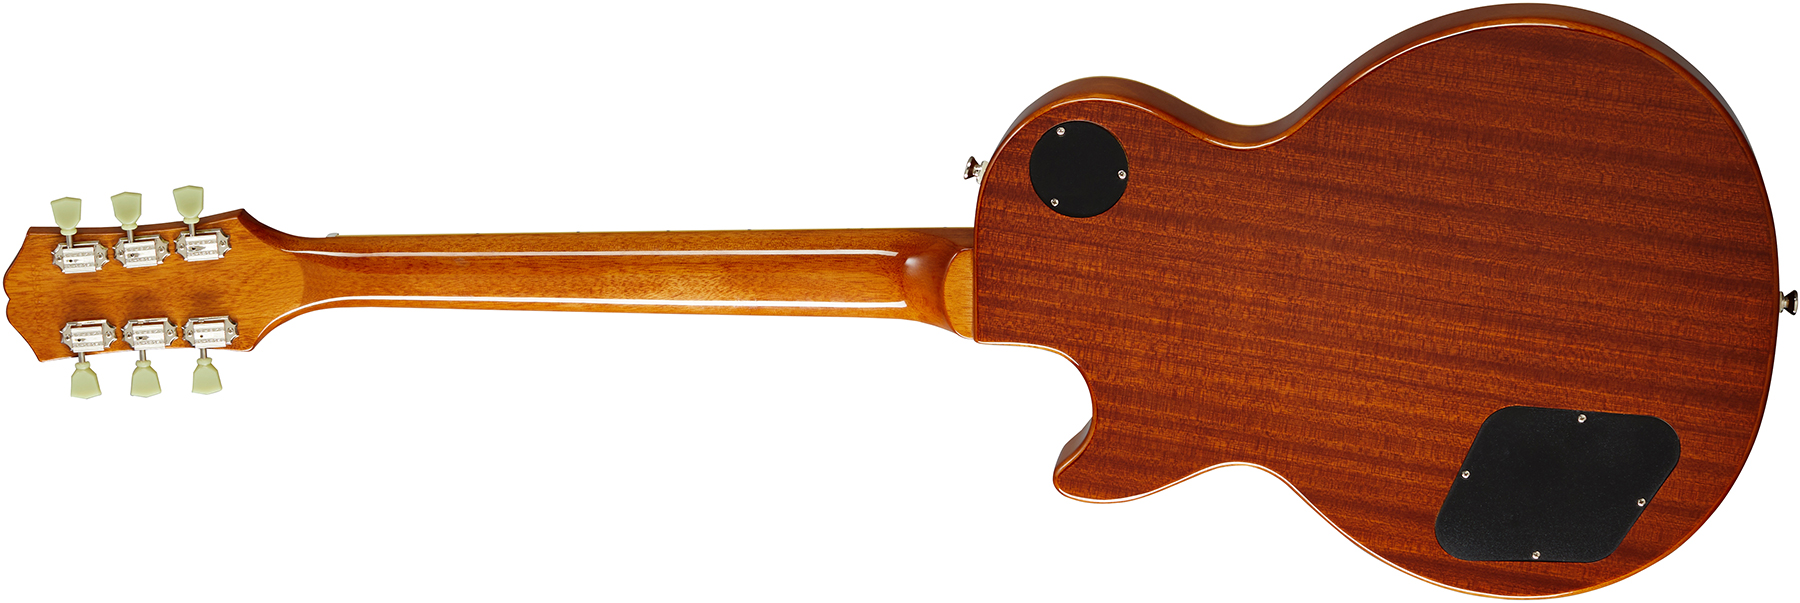 Epiphone Les Paul Standard 50s 2h Ht Rw - Metallic Gold - Single cut electric guitar - Variation 1